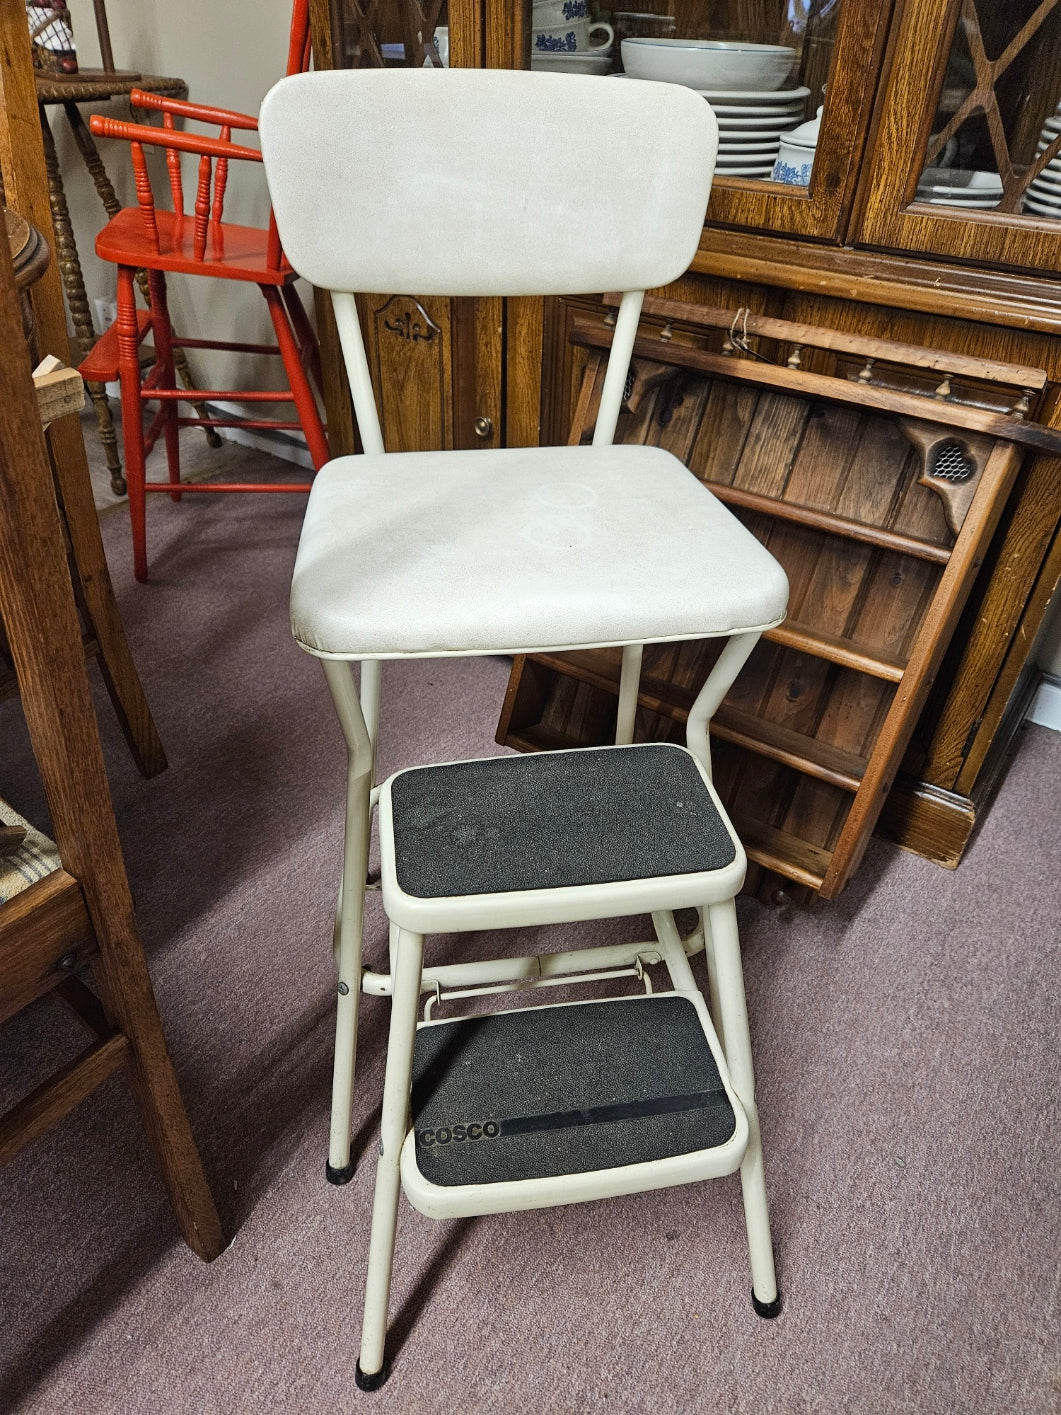 Vintage High Chair/Step Stool